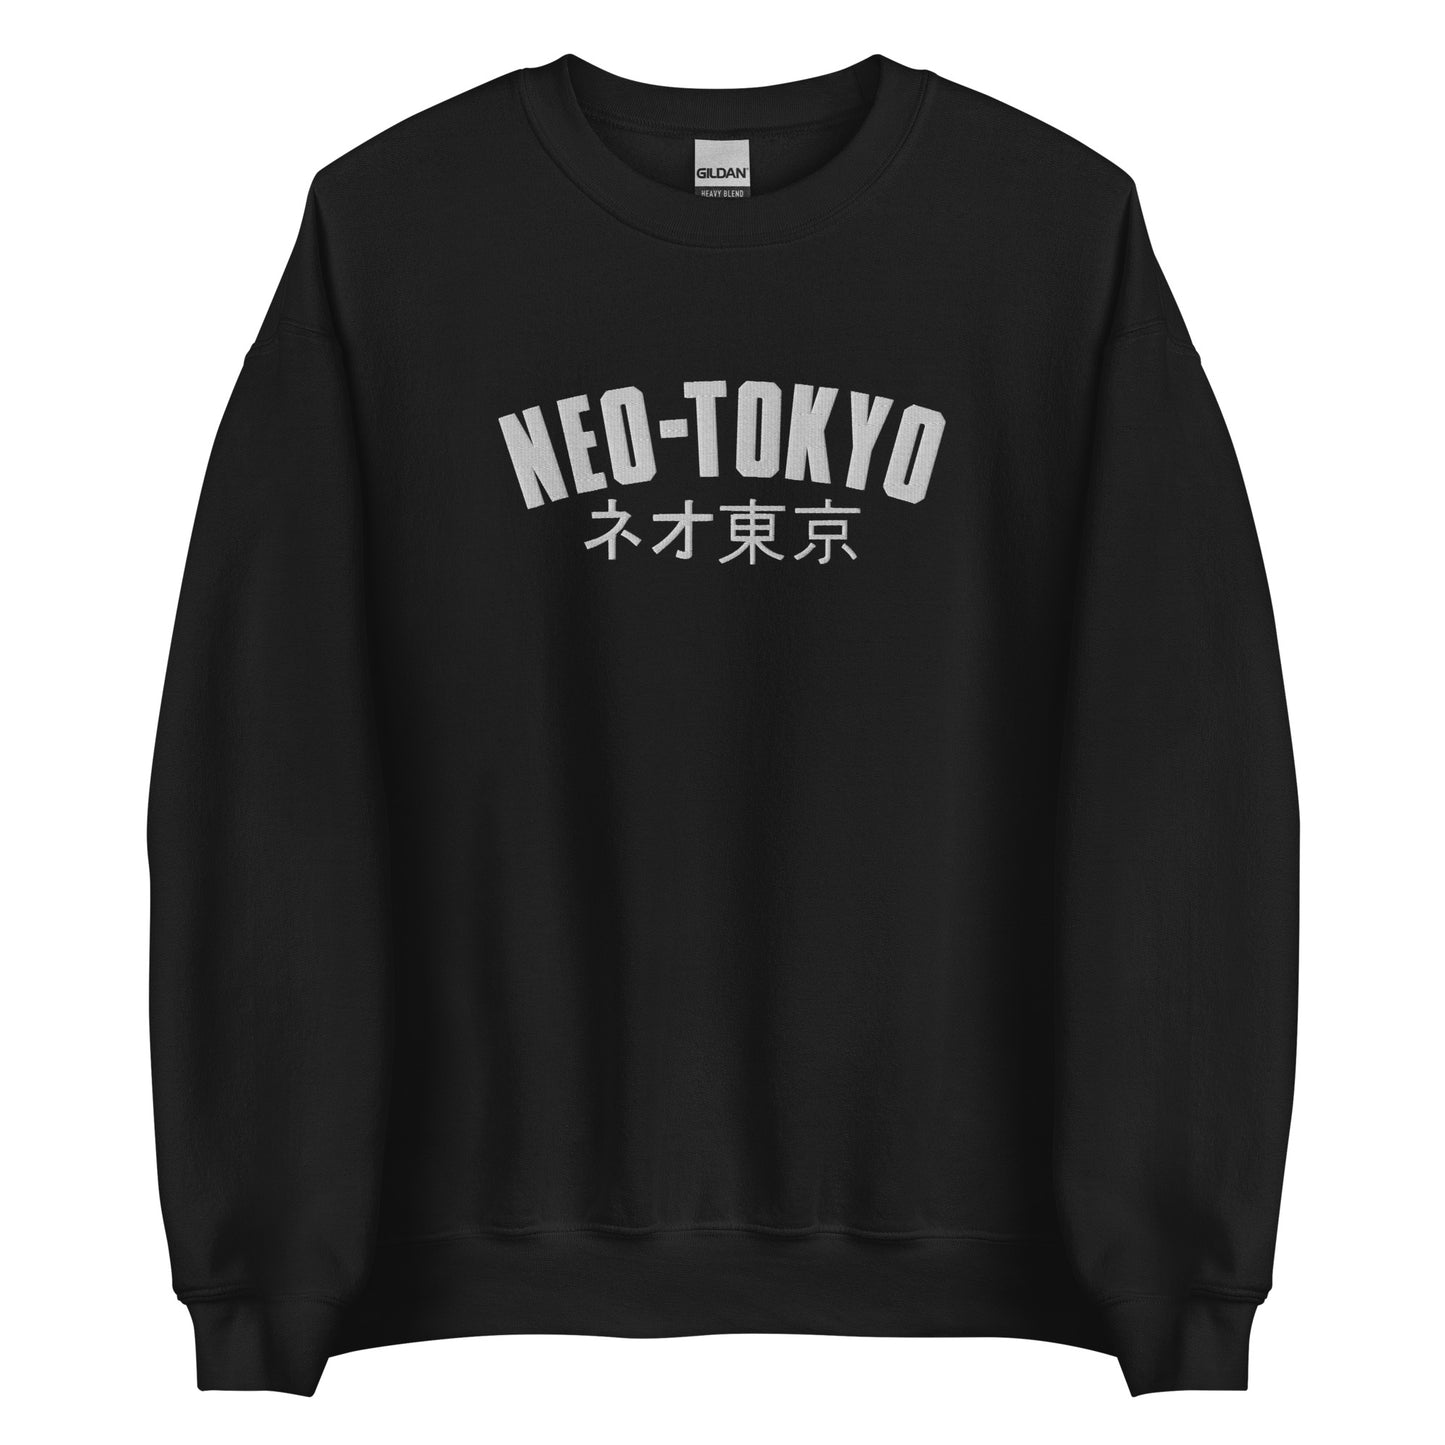 Neo-Tokyo embroidered crewneck sweatshirt